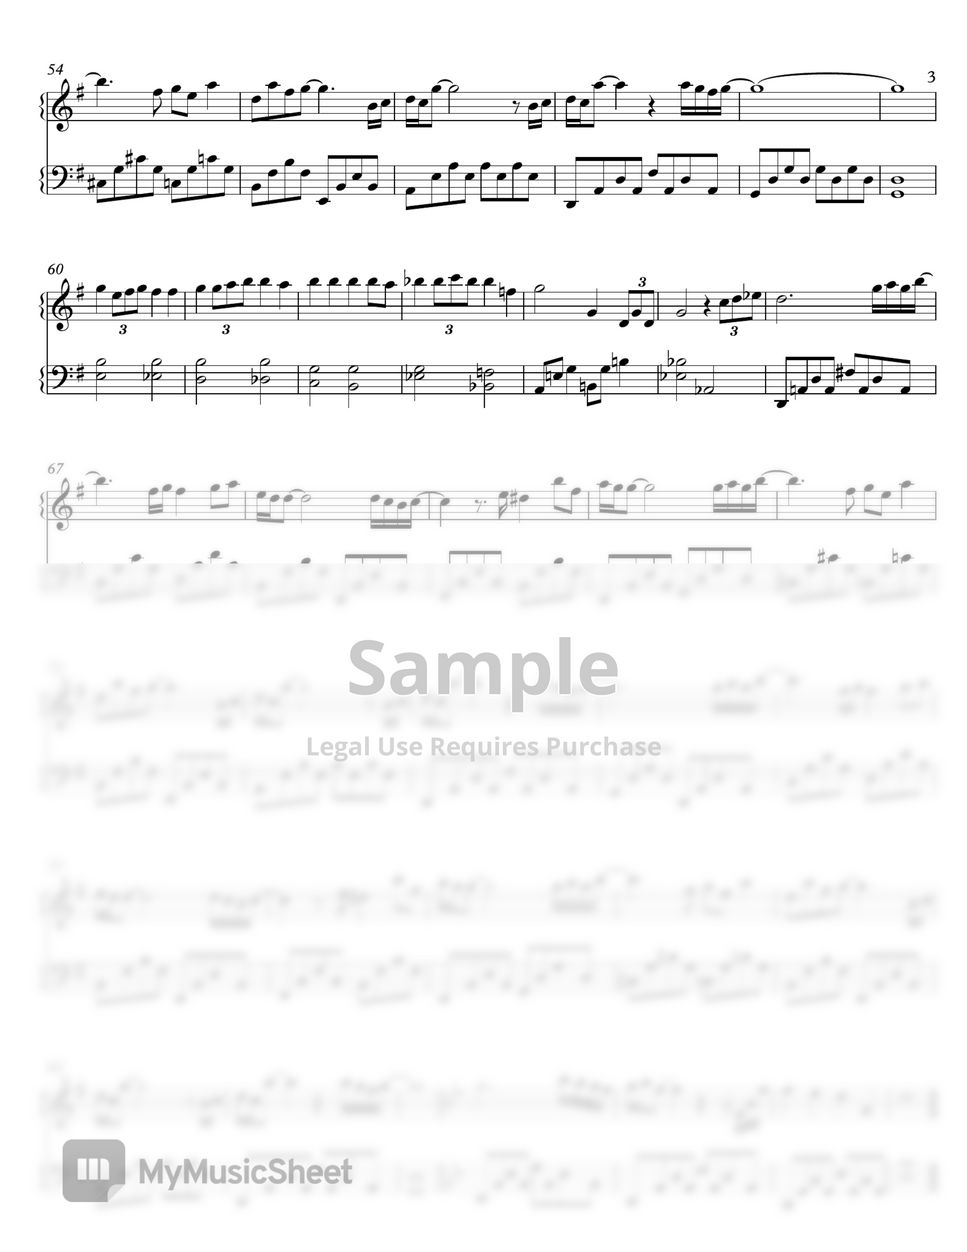 musiciscode Baka Mitai Sheet Music (Leadsheet) in Bb Major